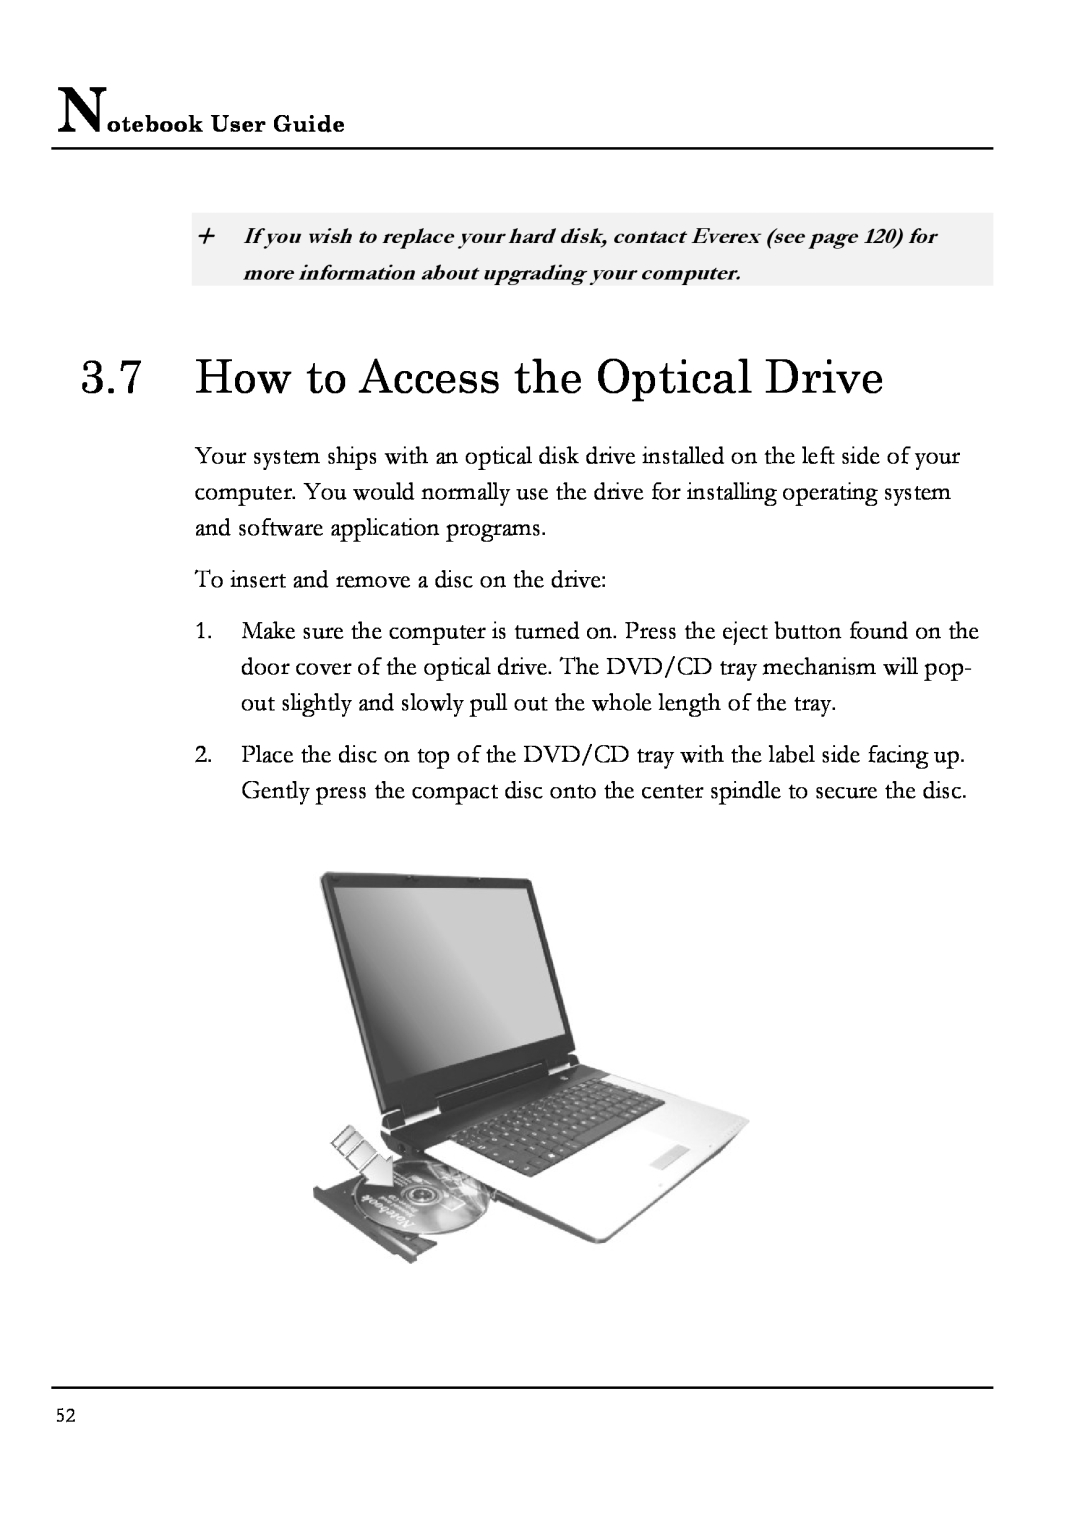 Everex NM4100W, NM3700W, NM3500W, NM3900W manual How to Access the Optical Drive 